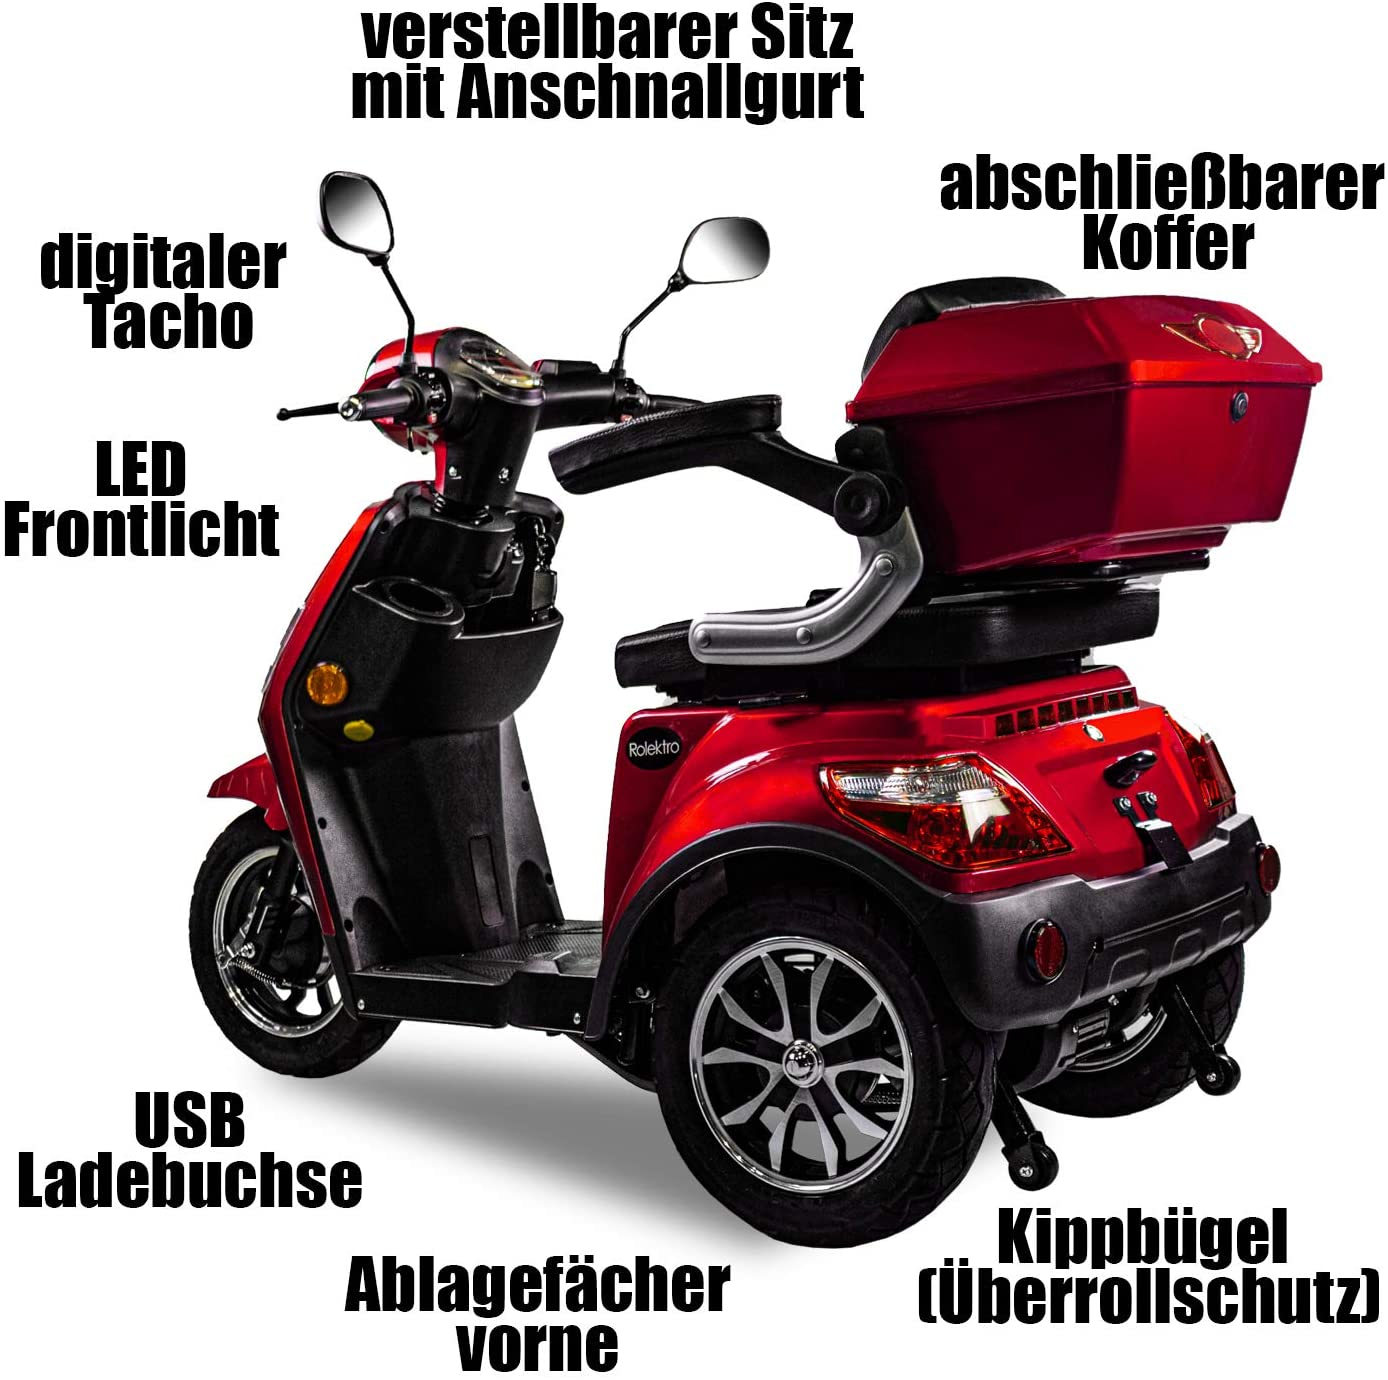 Seniorenmobil Zoll, 25 Lithium Unisex-Rad, E-Scooter ROLEKTRO Rot) 15,7 (Laufradgröße: E-Trike V.3